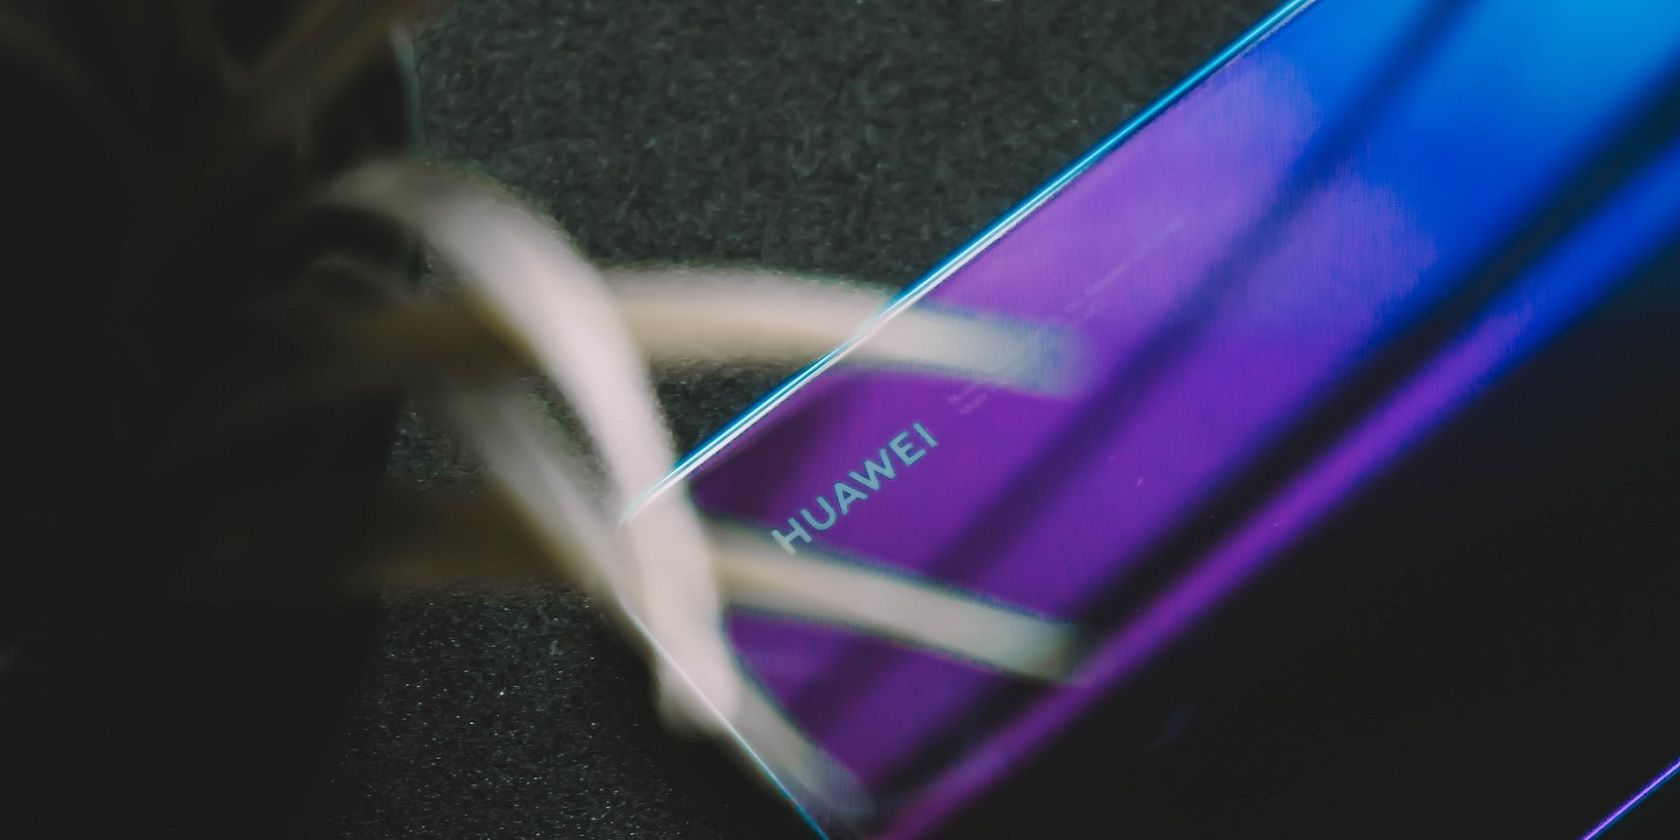 Huawei phone on a dark background